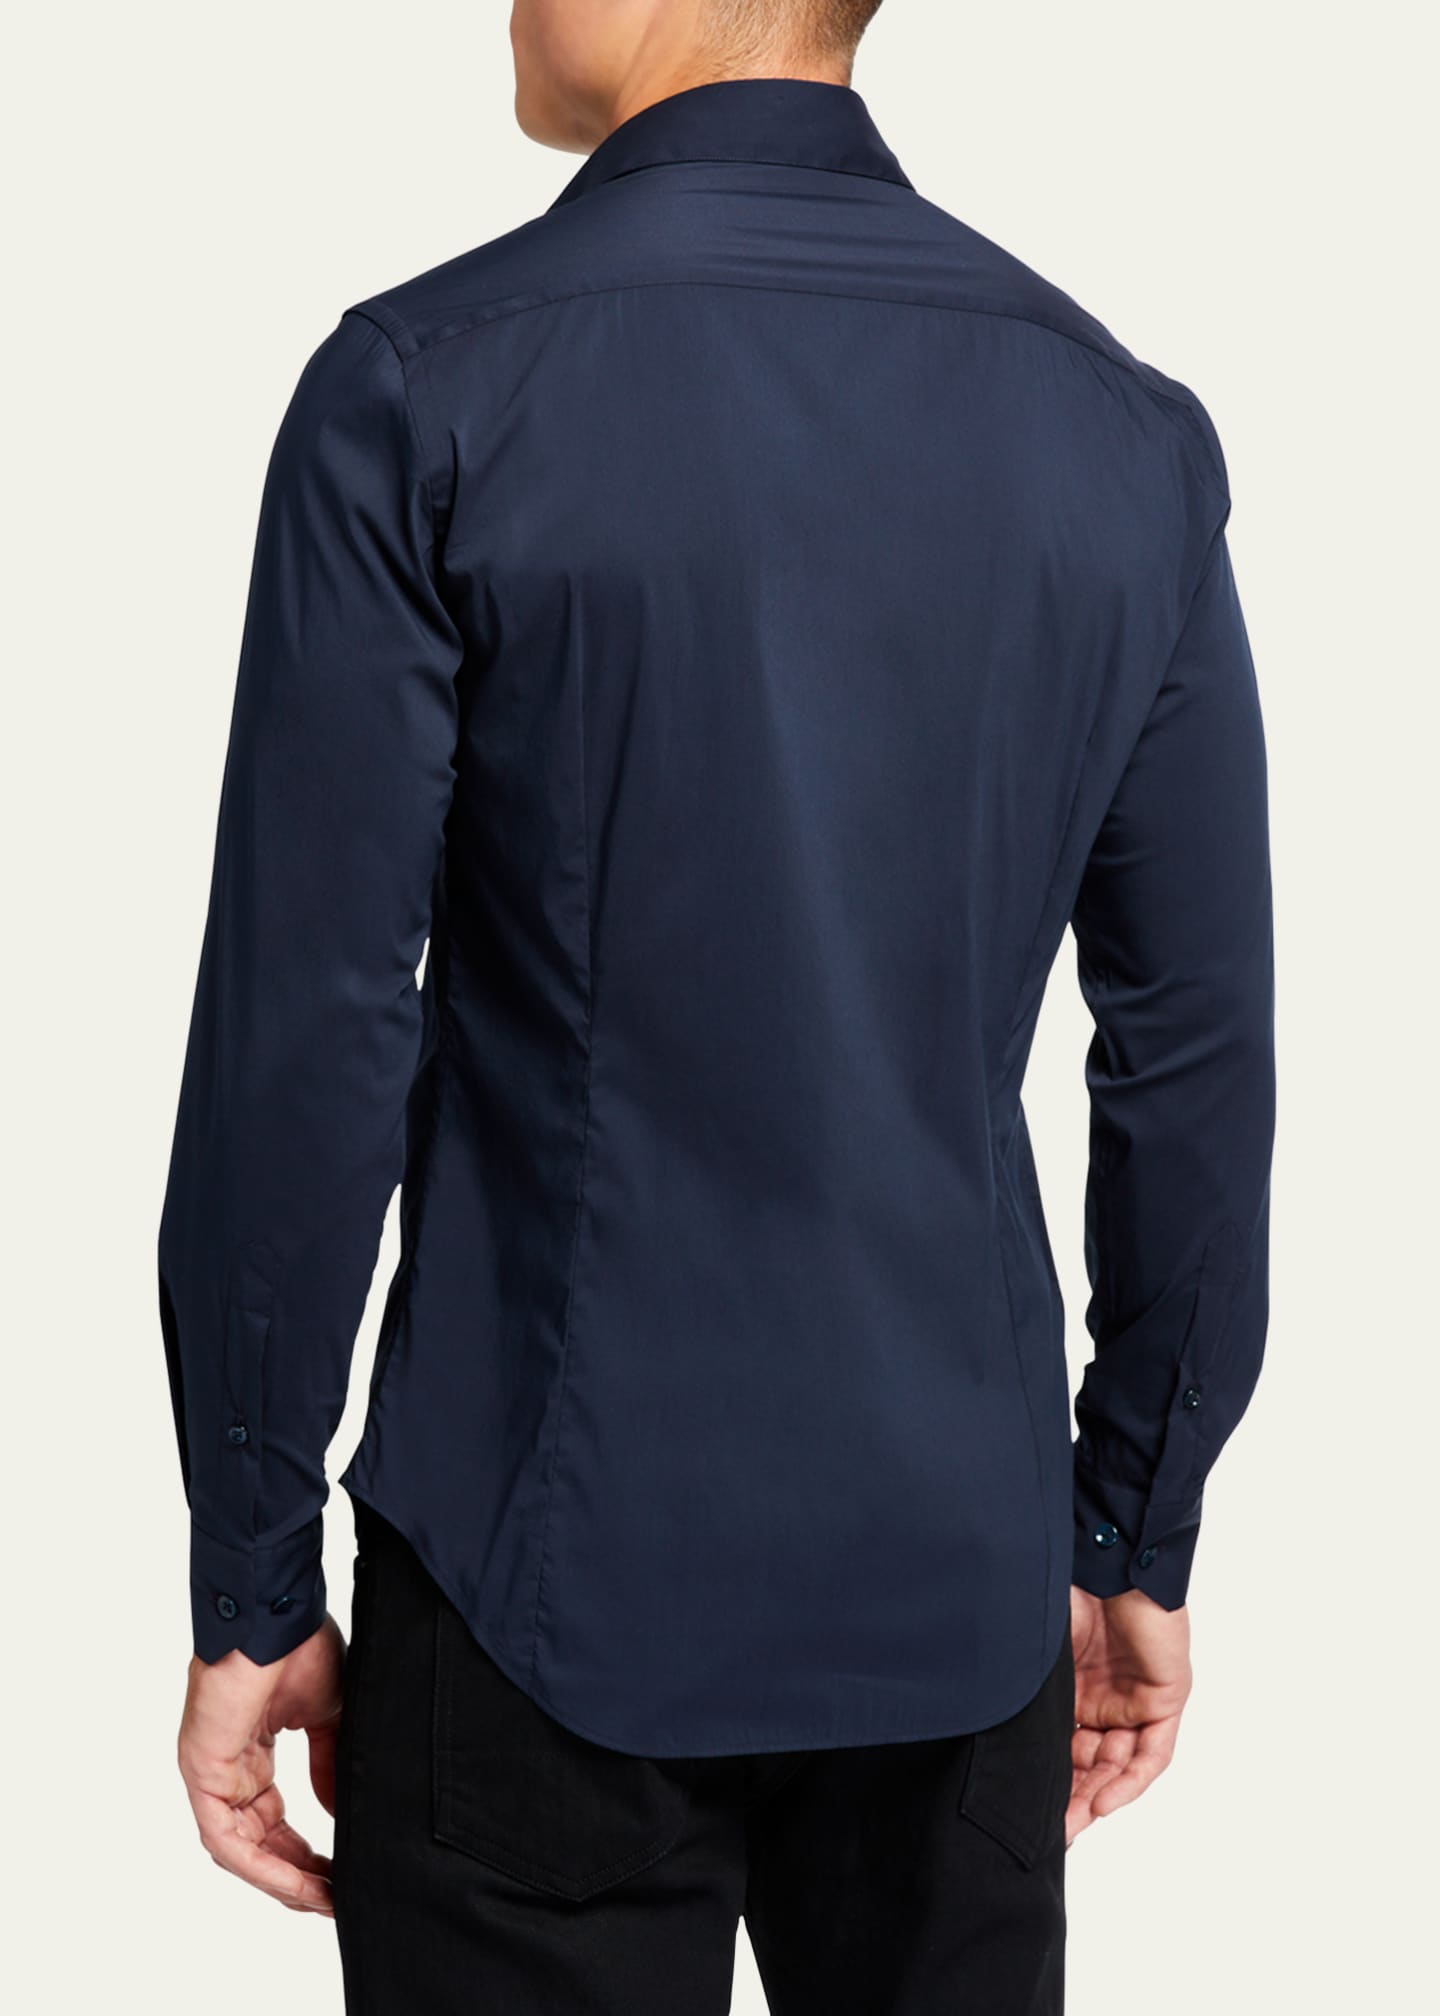 Giorgio Armani Men's Basic Sport Shirt, Navy - Bergdorf Goodman